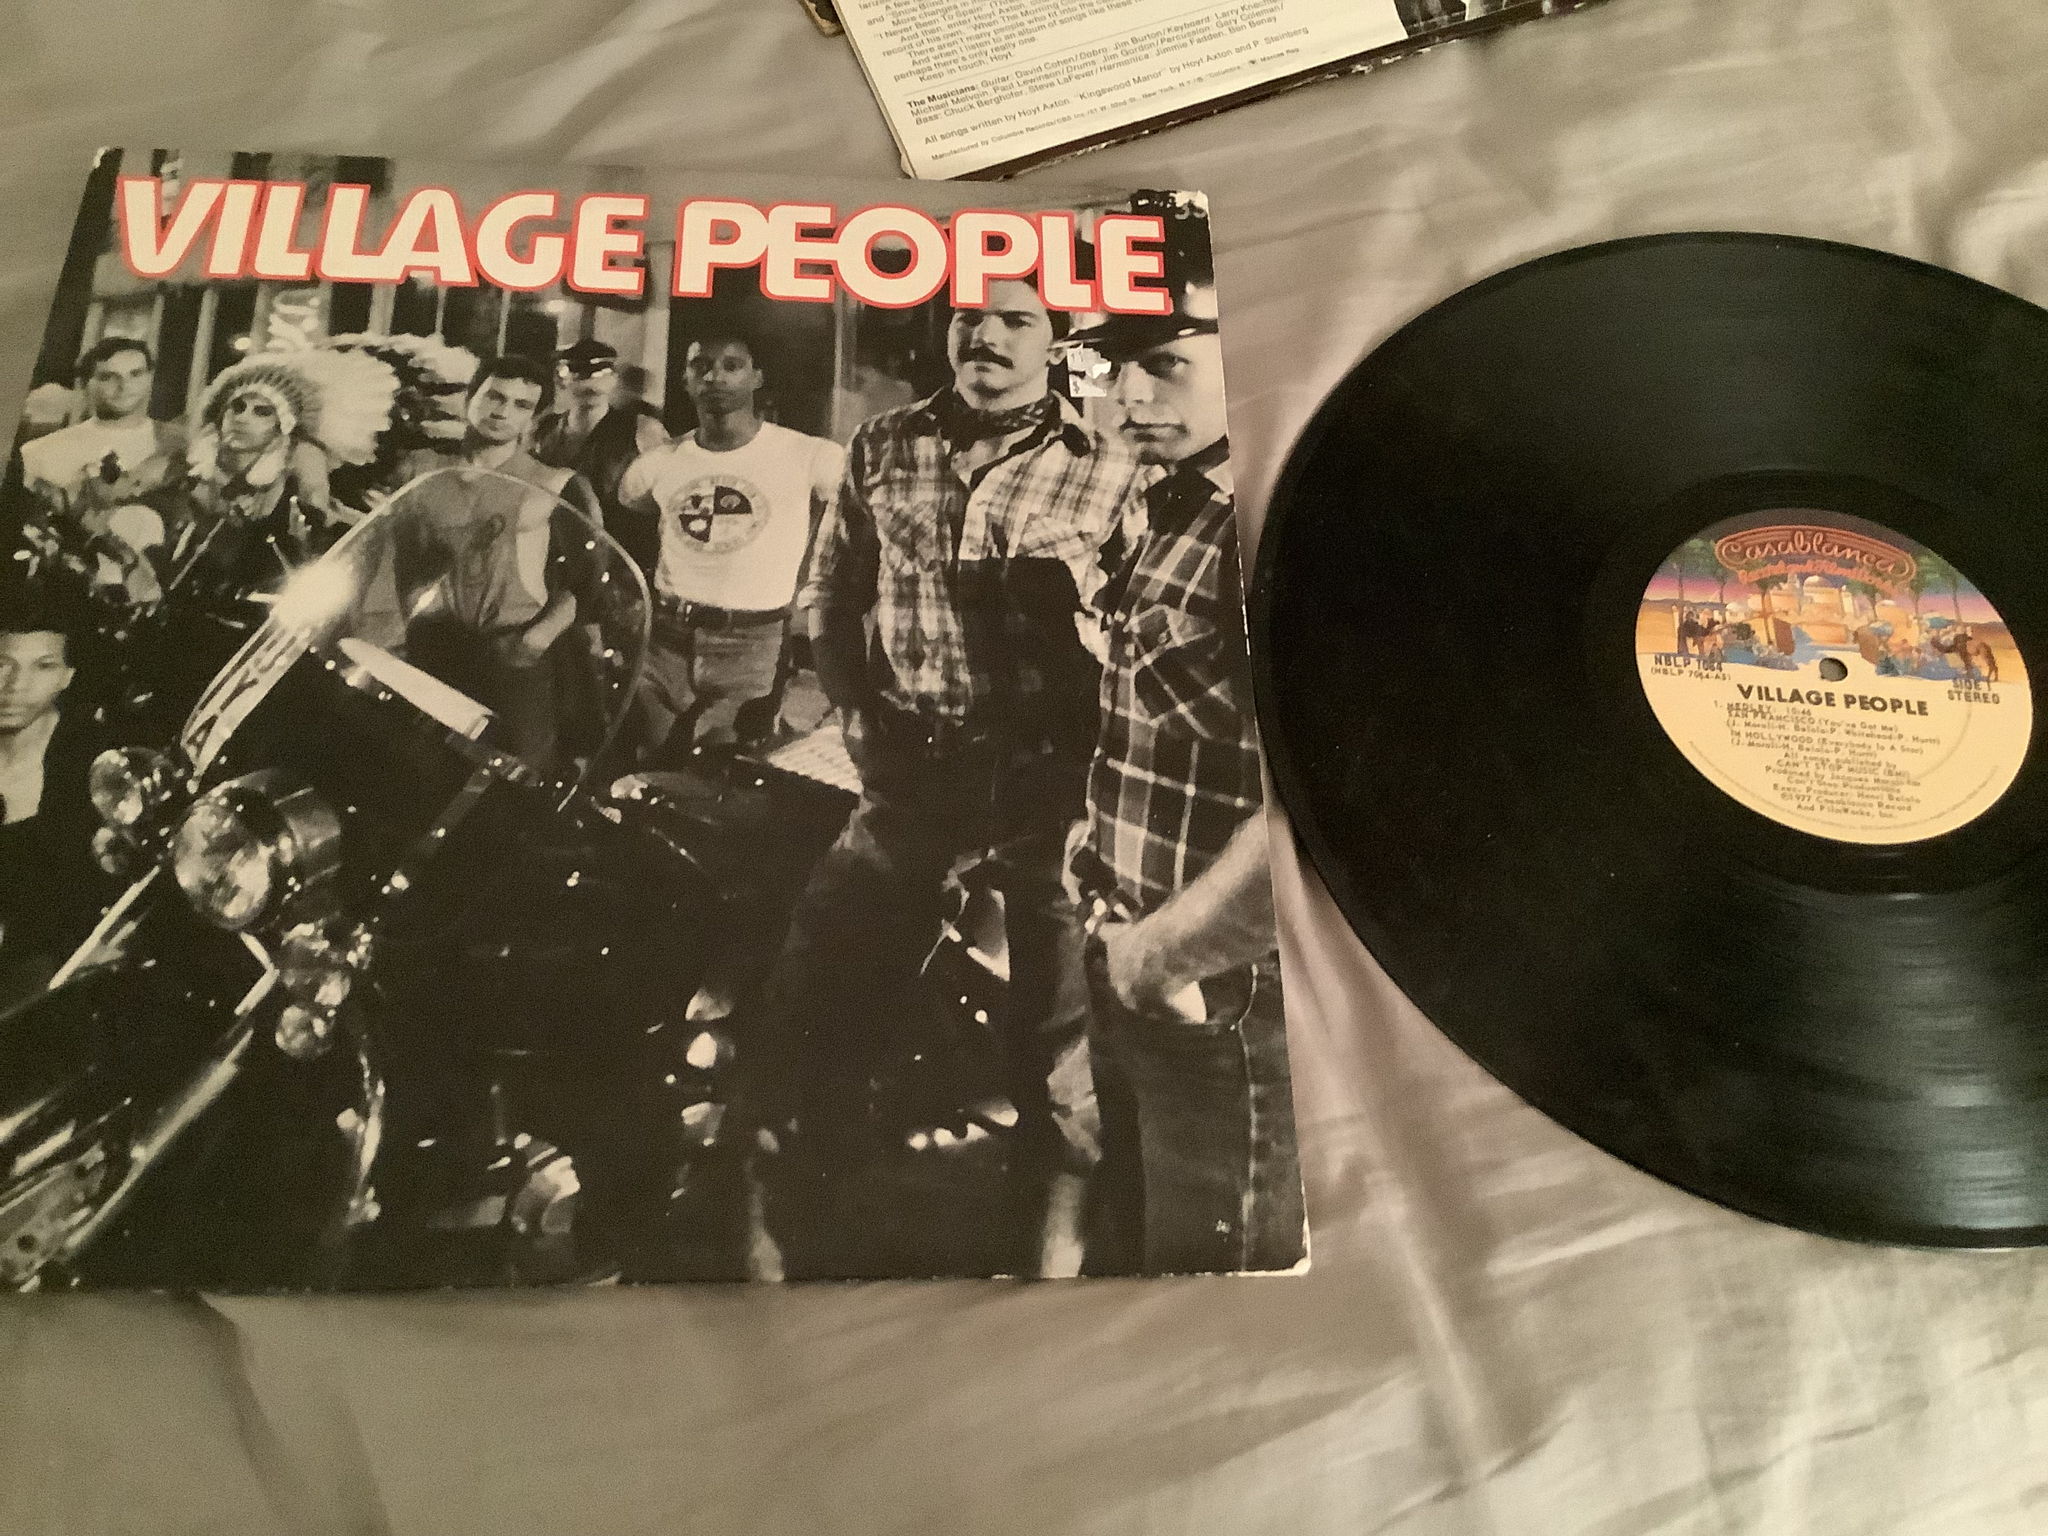 The Village People Casablanca Records  The Village People